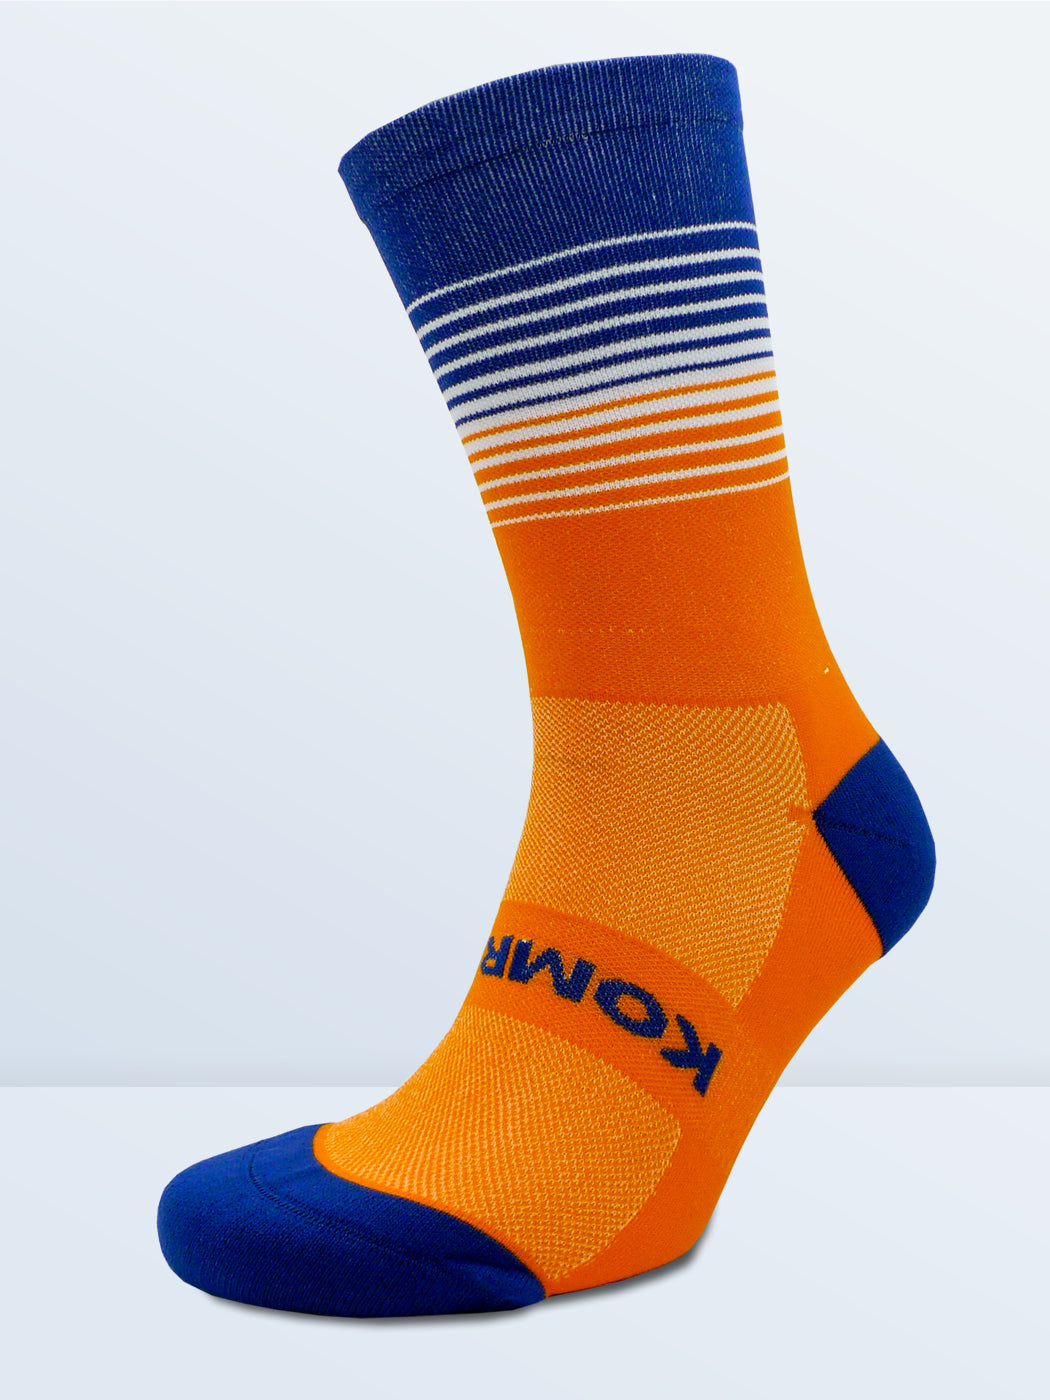 Swagger Socks - Fluro Orange & Blue